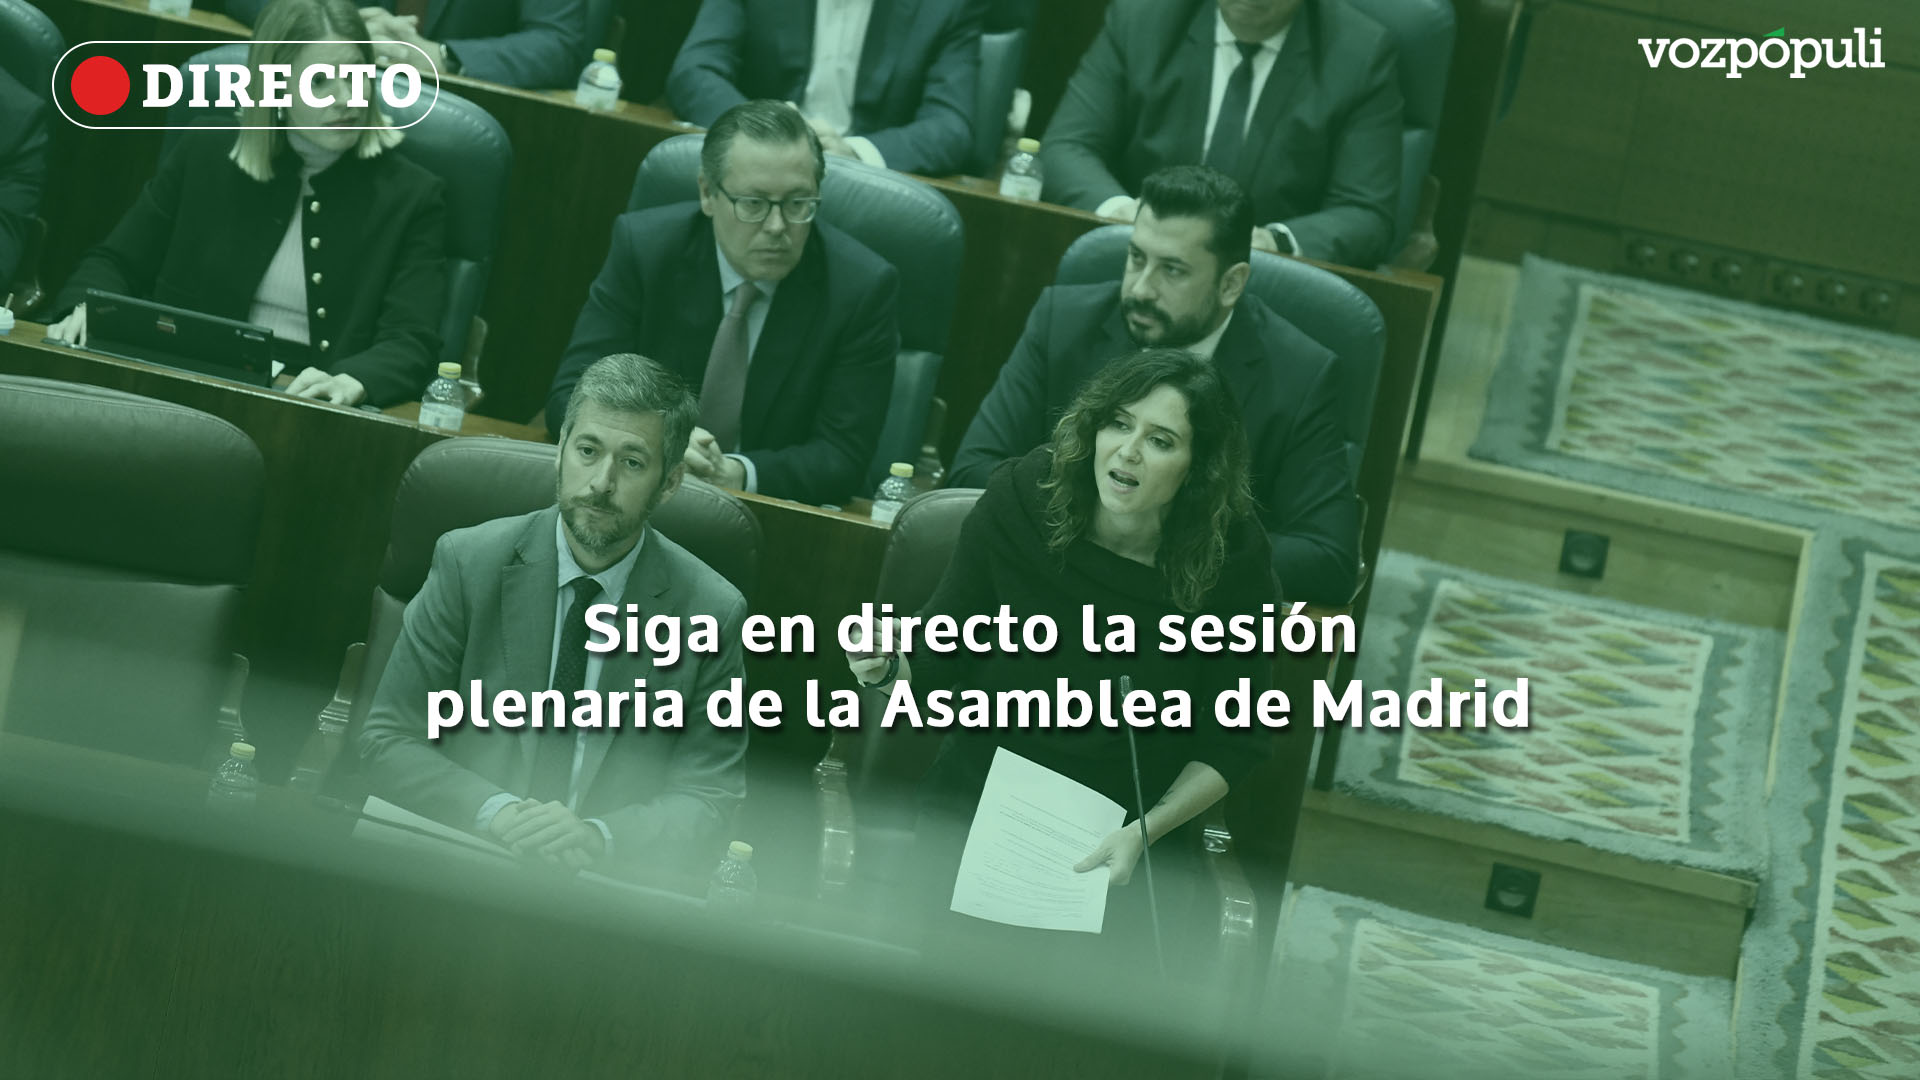 El pleno de la Asamblea de Madrid